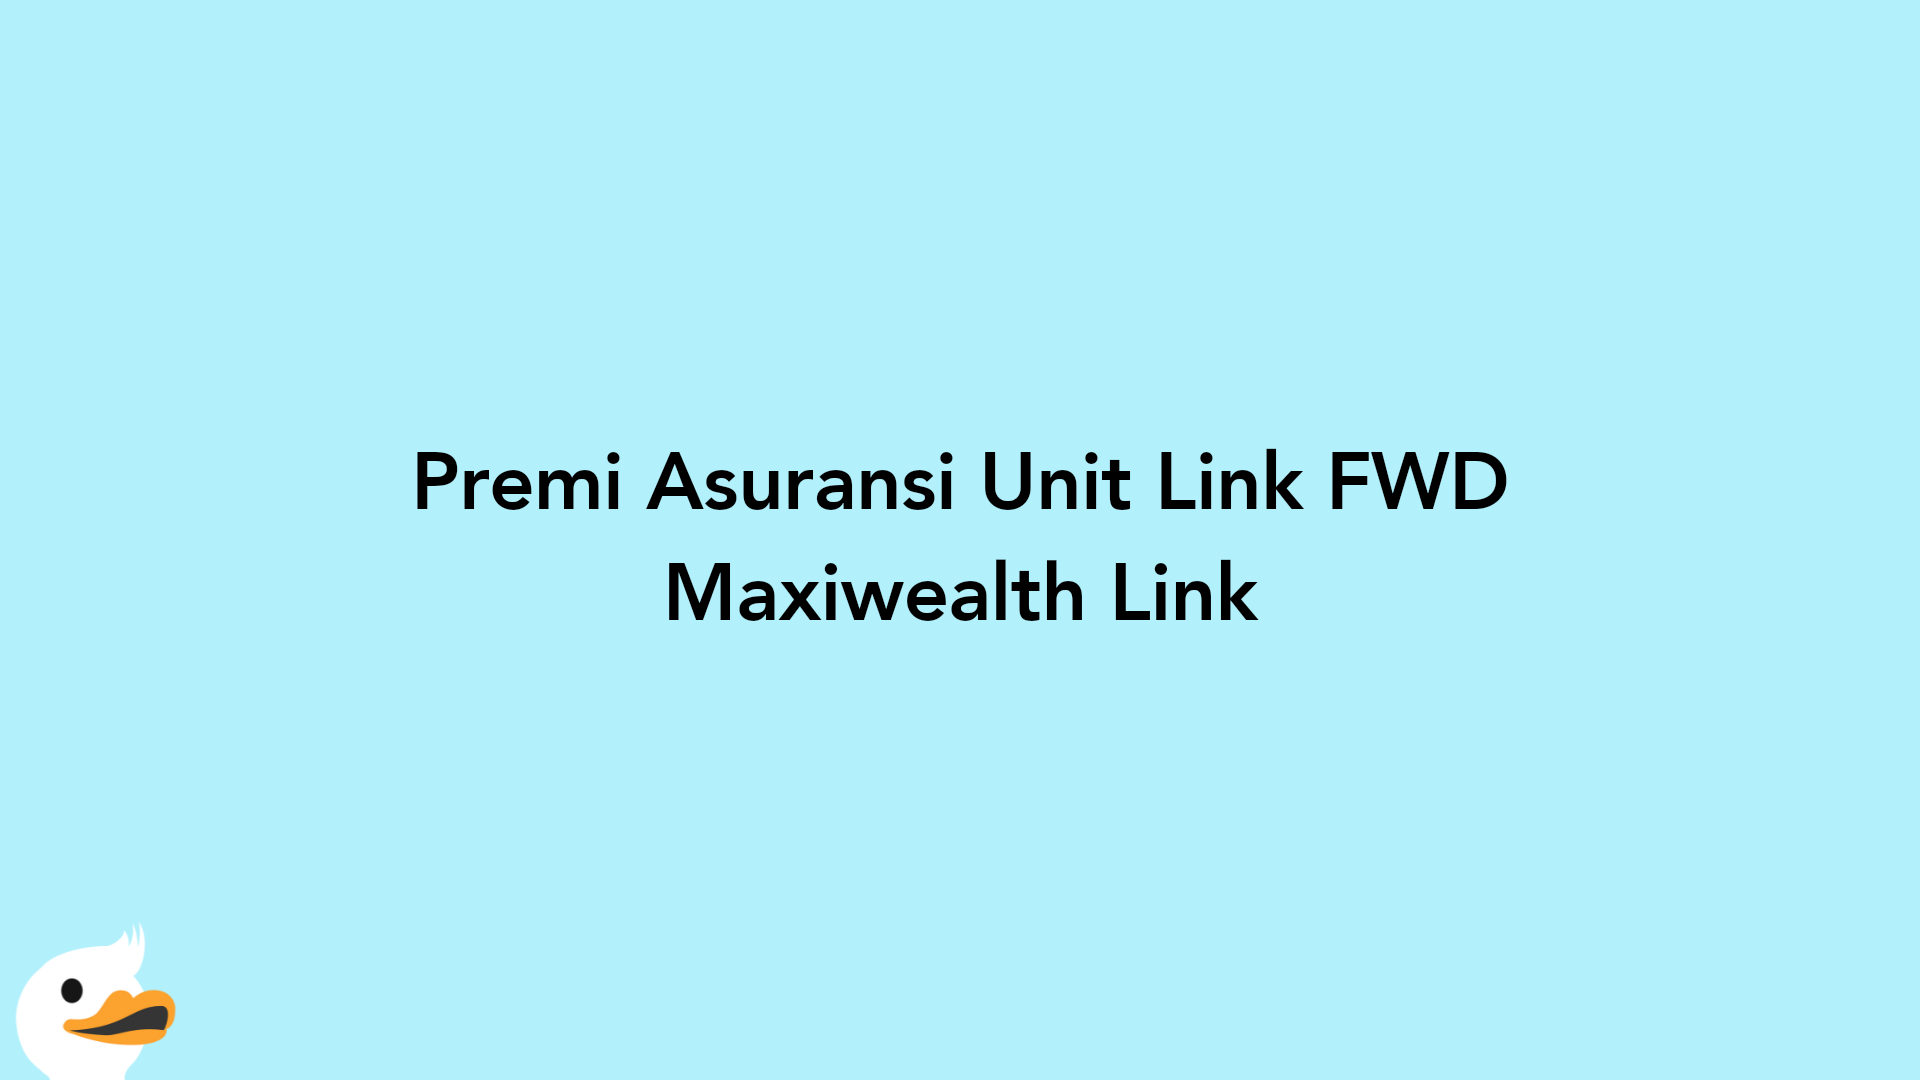 Premi Asuransi Unit Link FWD Maxiwealth Link